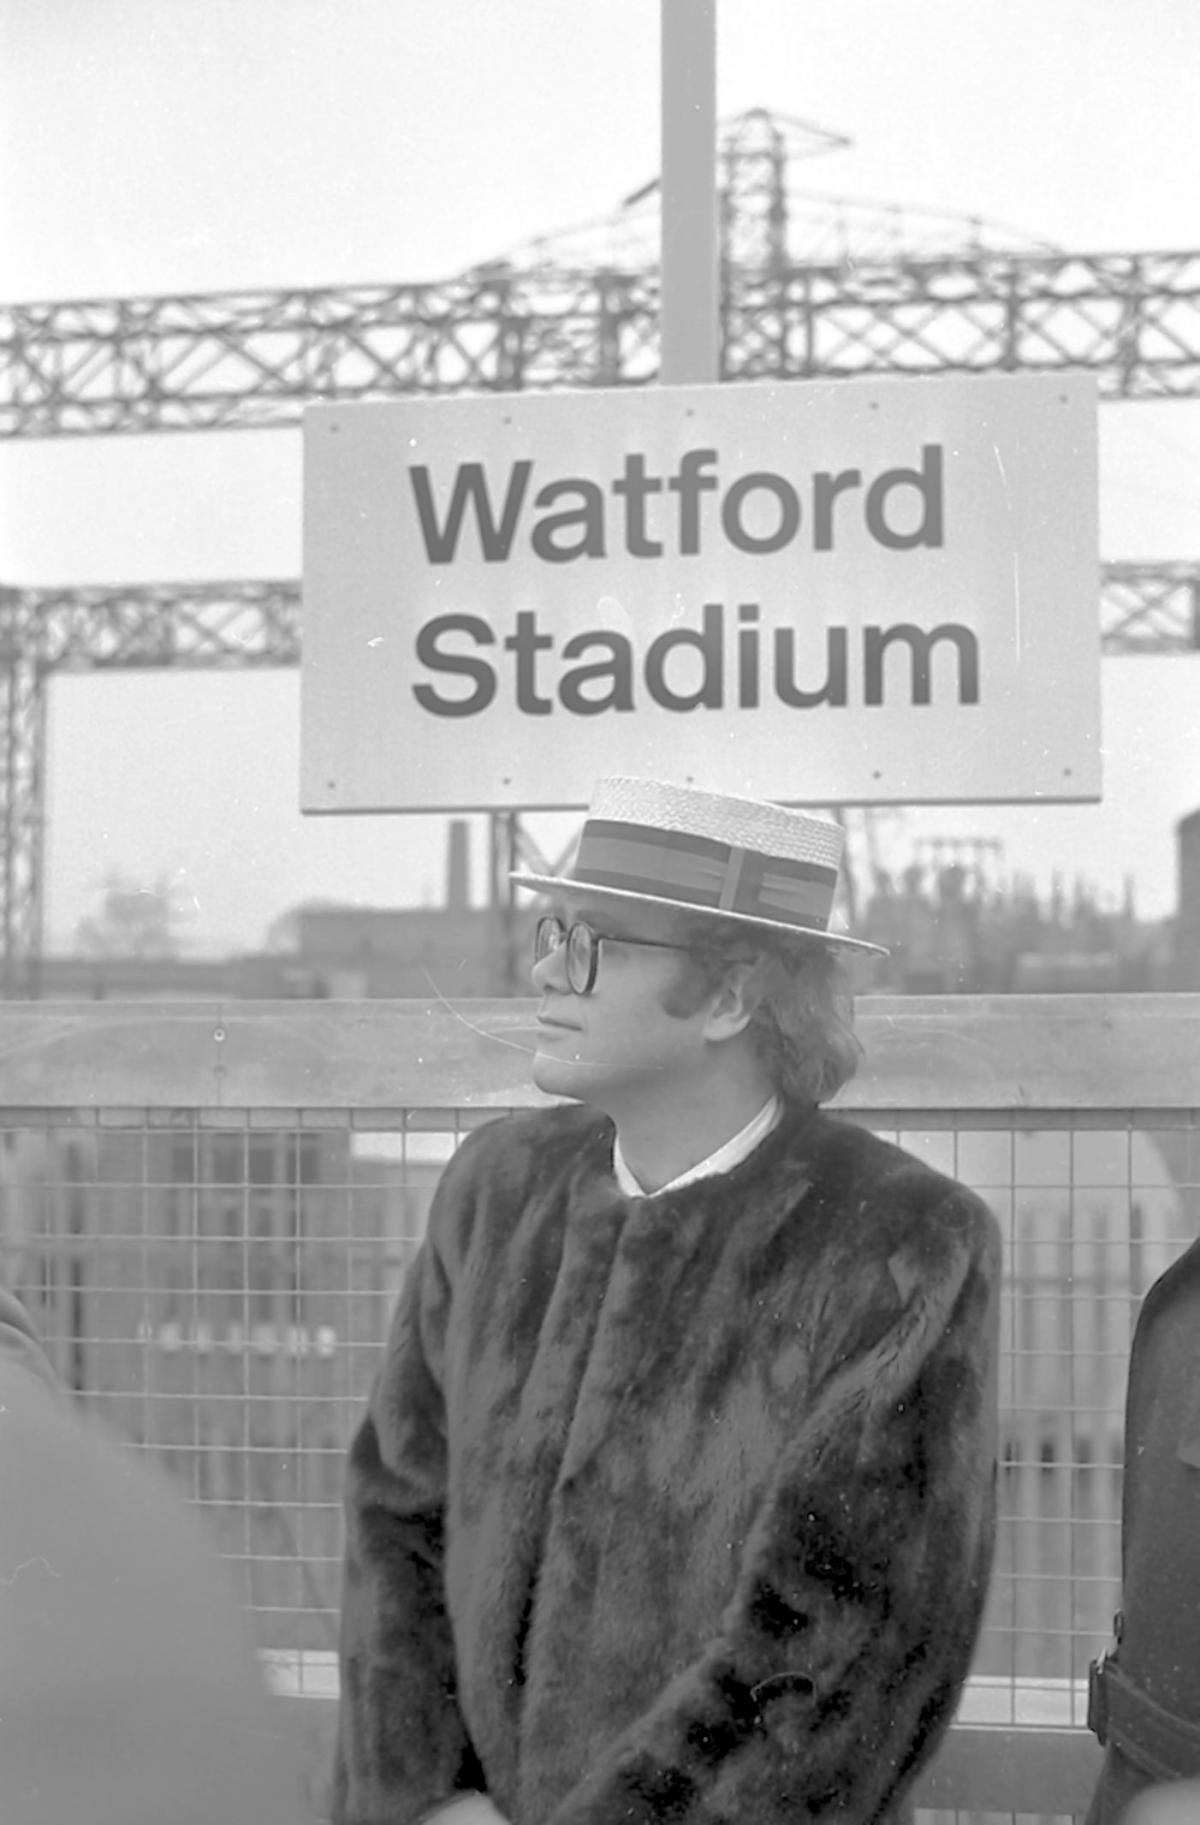 The rock star chairman beneath the Watford Stadium sign